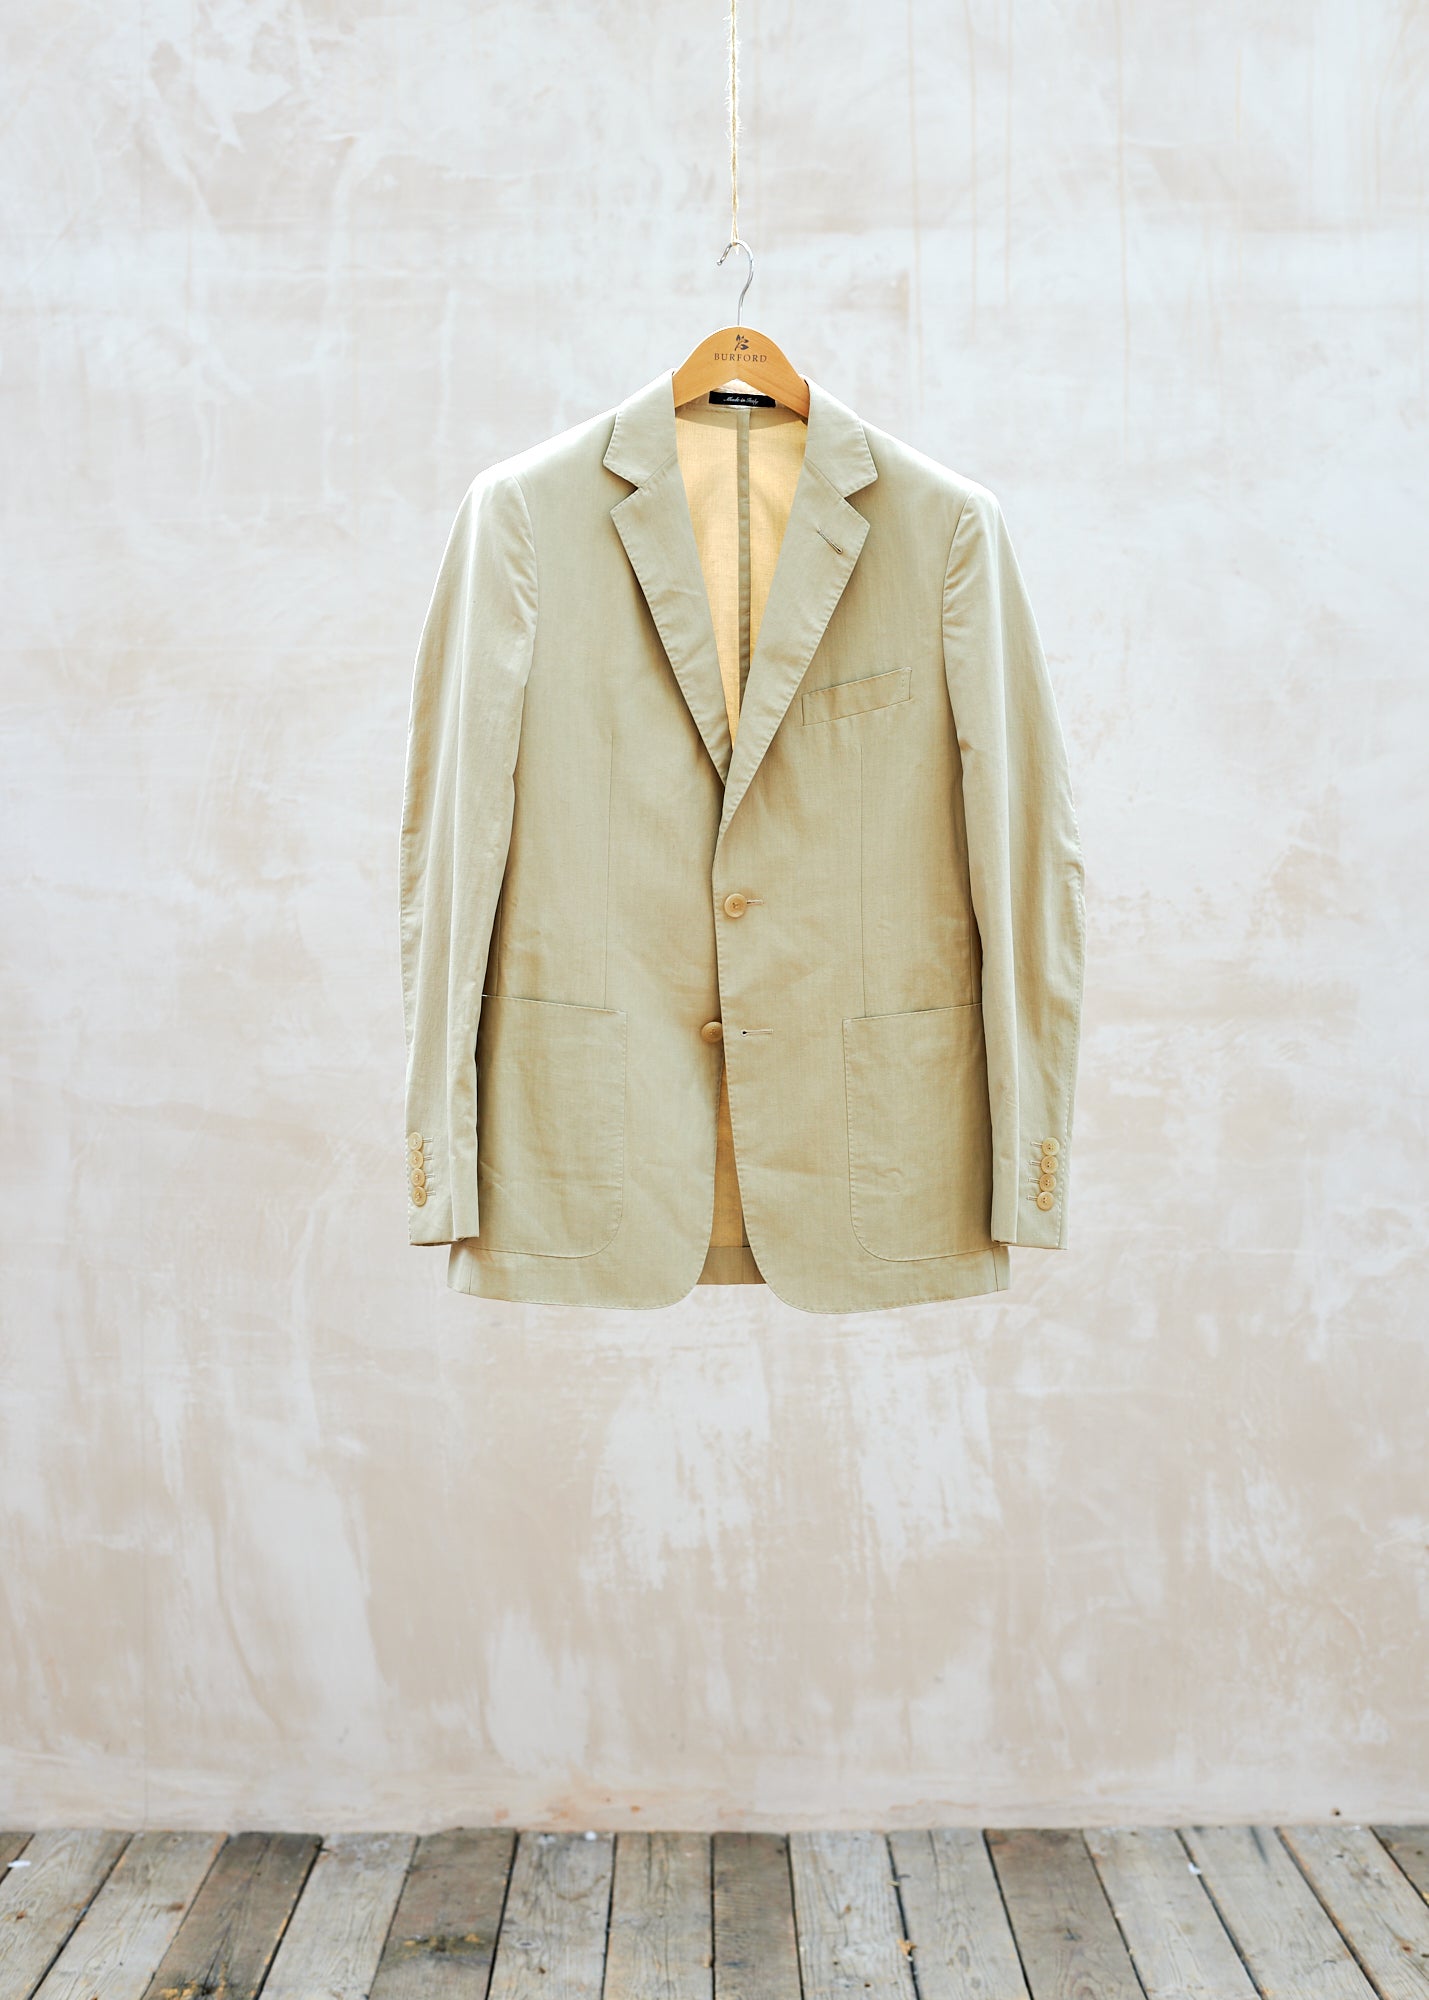 Dunhill Smart Unstruct Cotton/Silk/Linen Beige Jacket - M